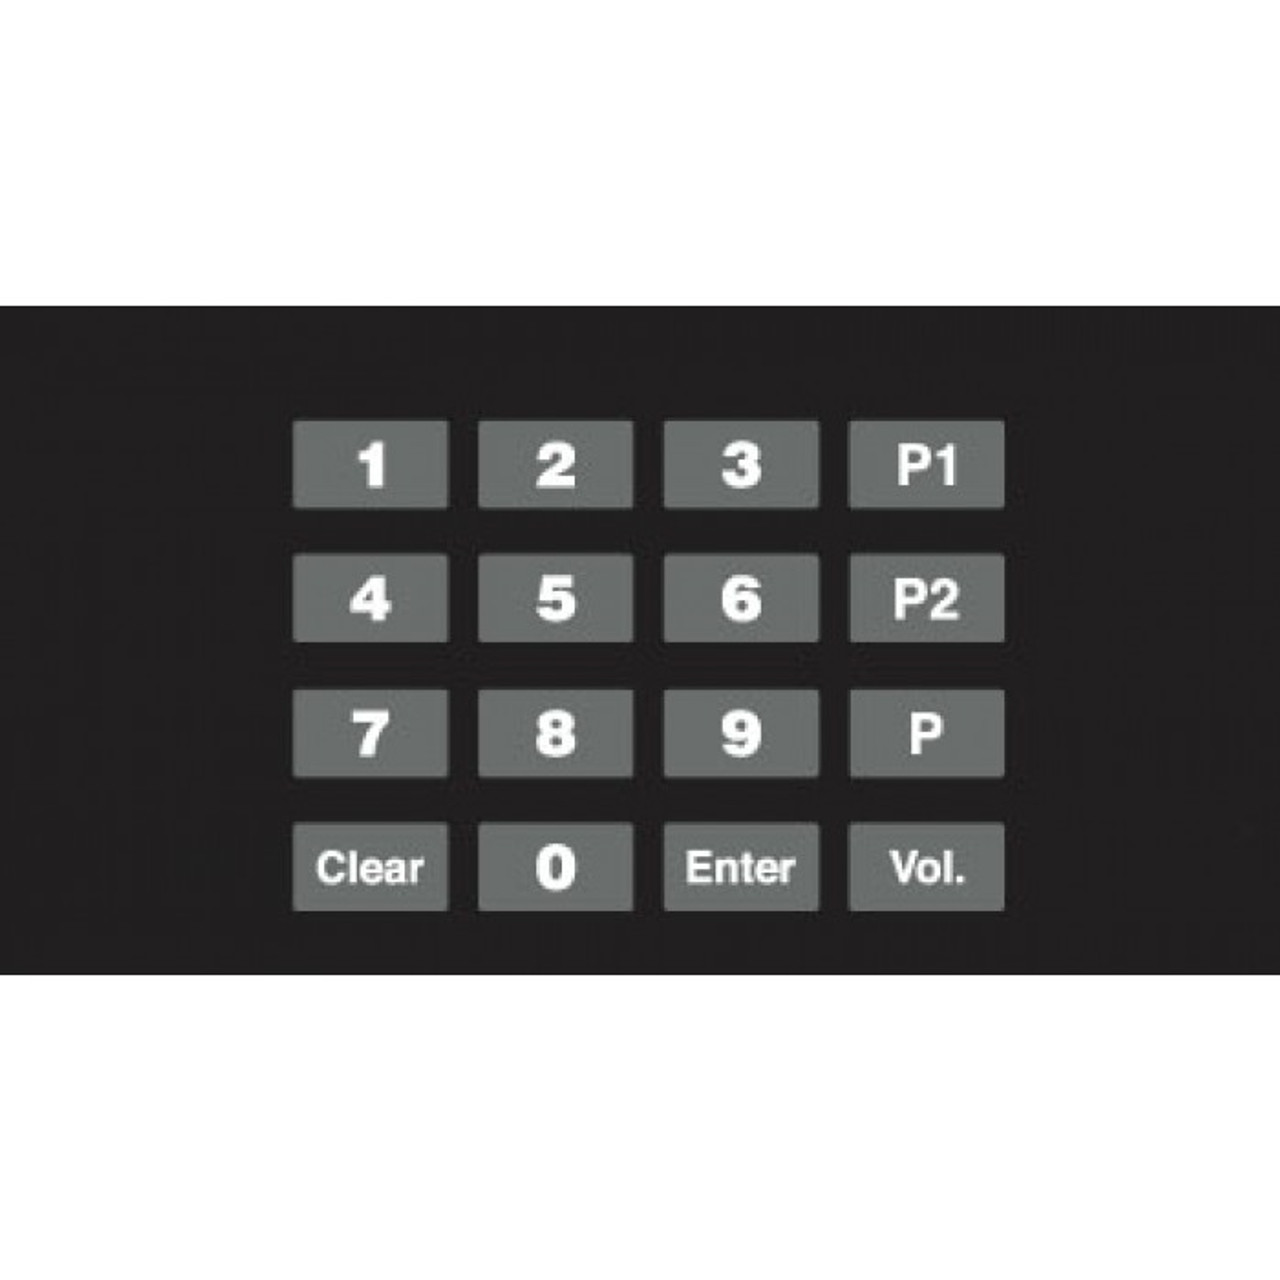 EU03001G006 - PPP Keypad Overlay